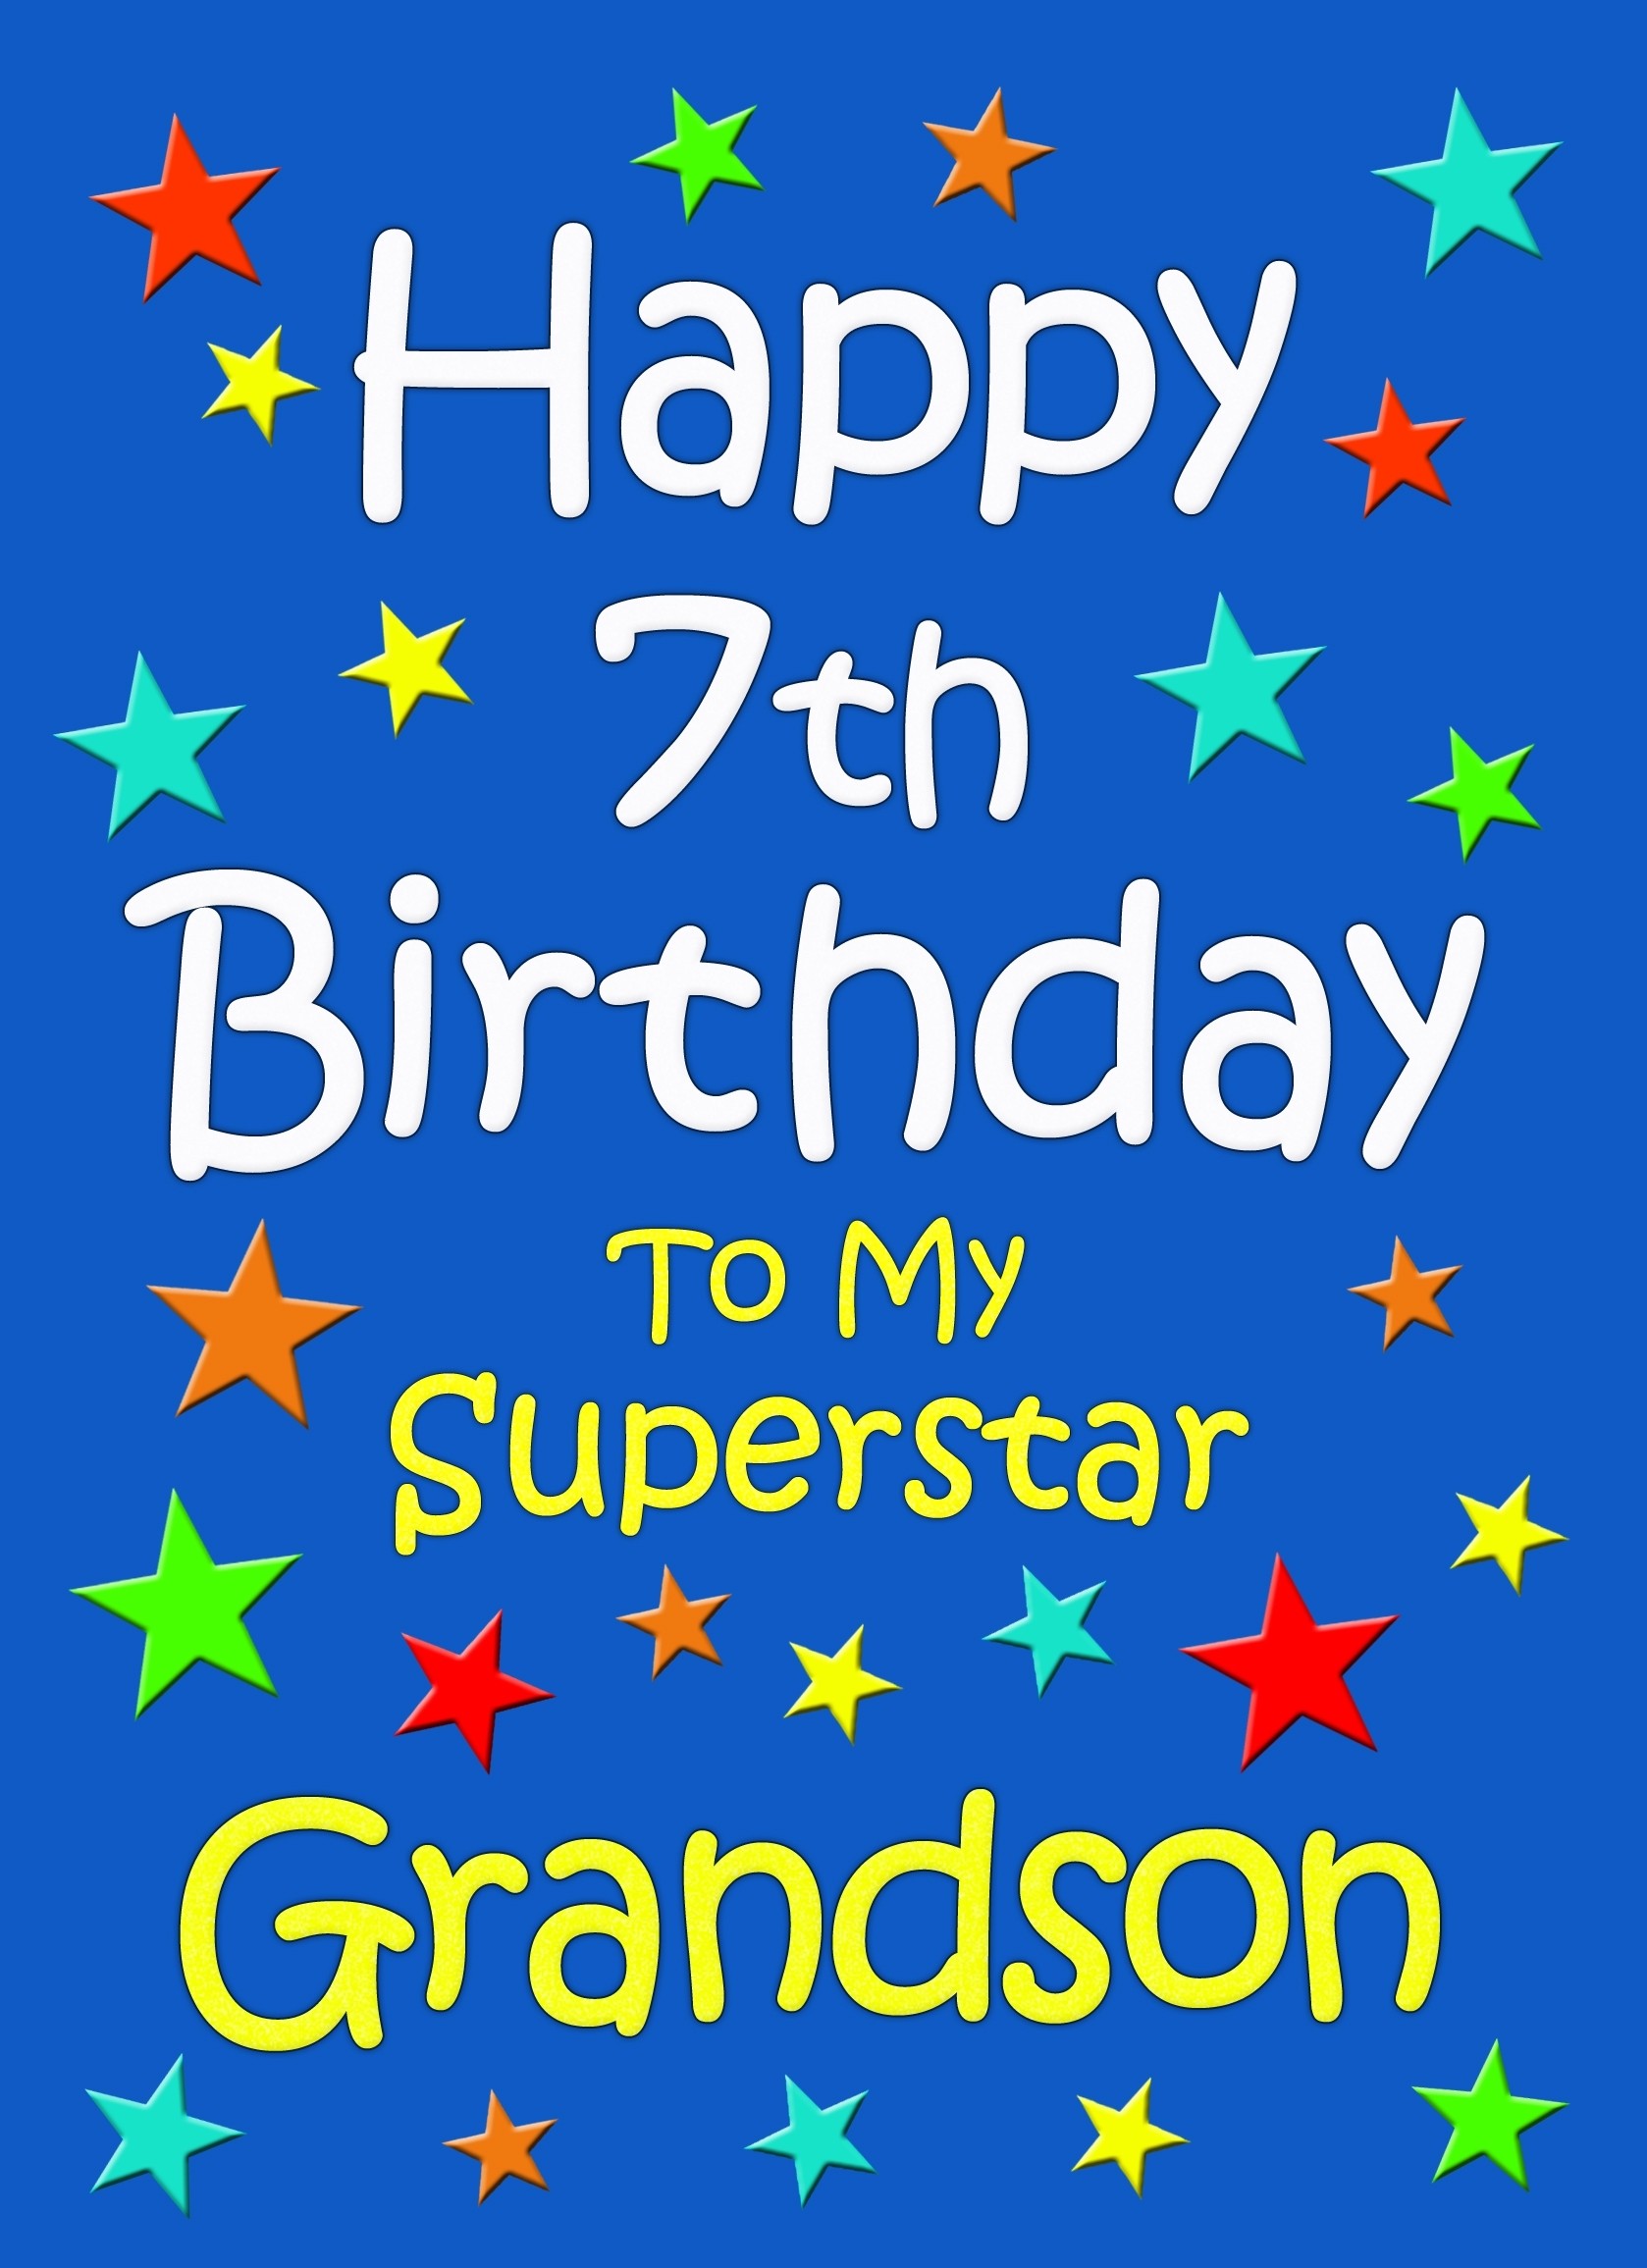 Grandson 7th Birthday Card (Blue)